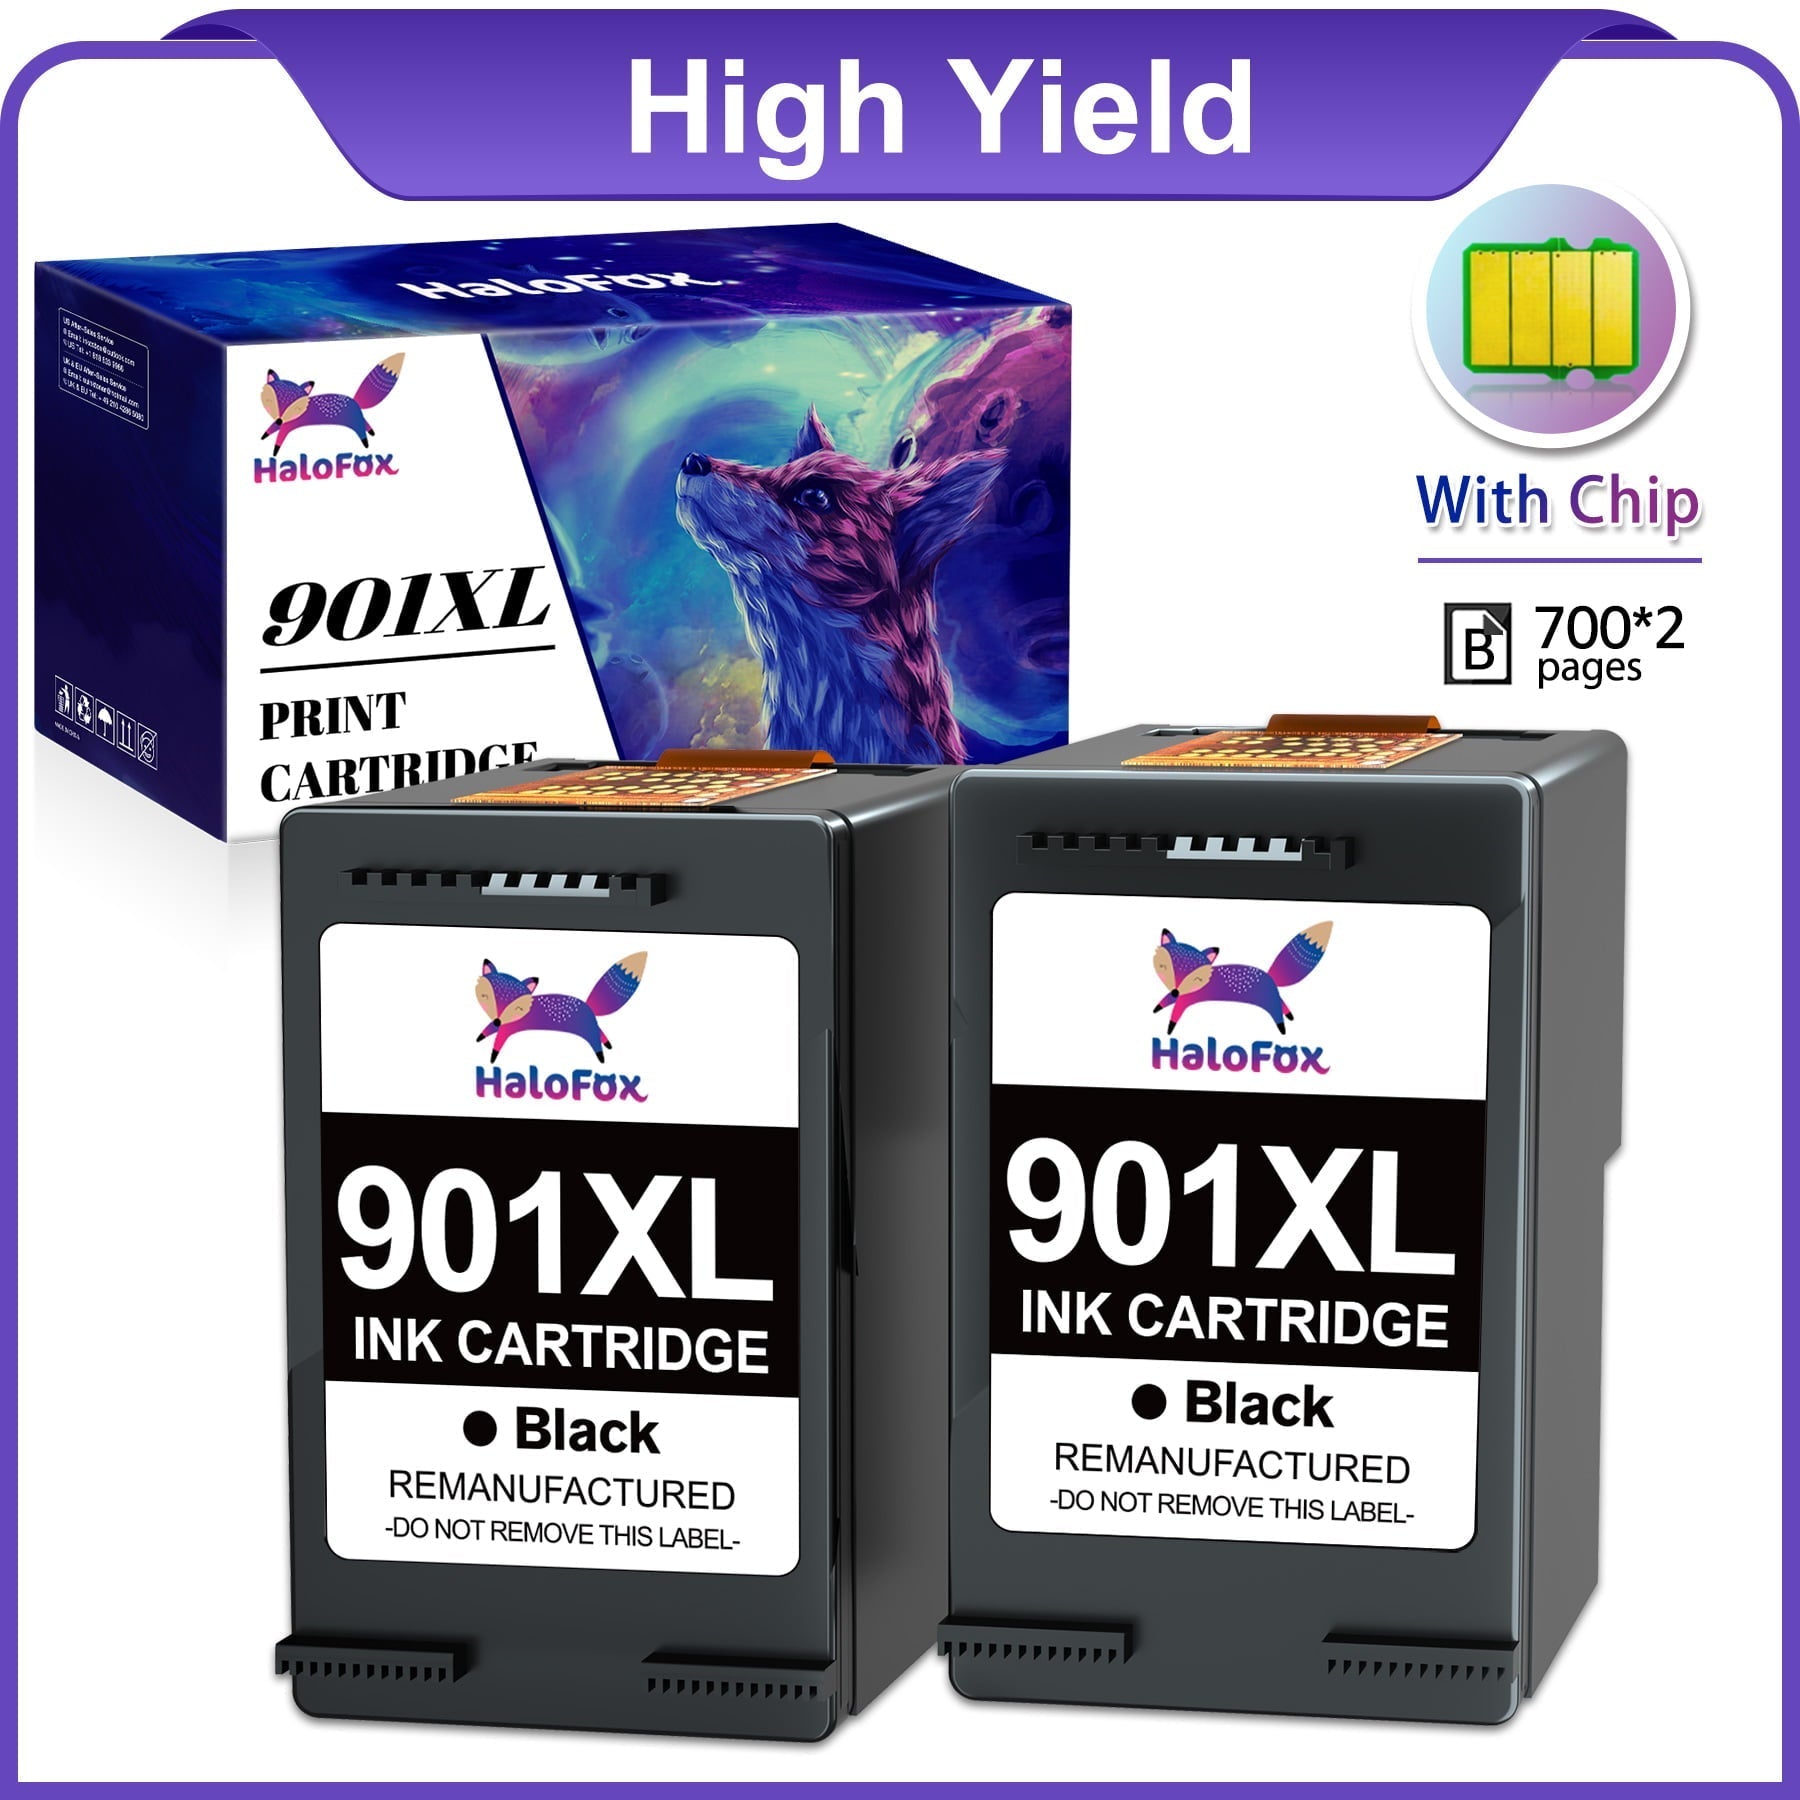 Halofox 901XL Black Ink Cartridges (2 Black)